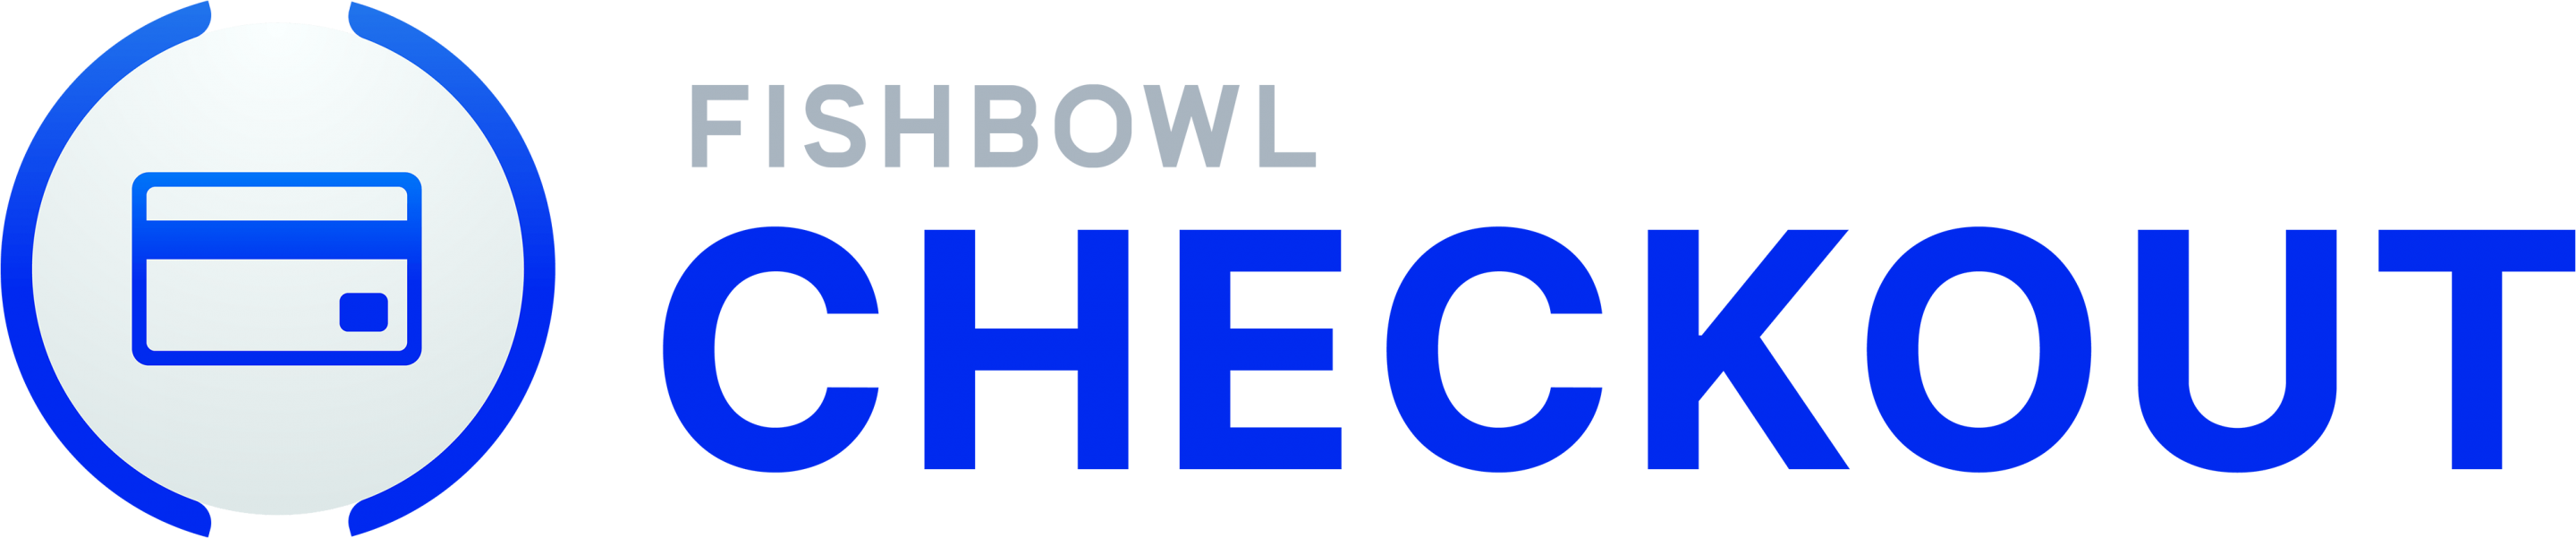 Fishbowl Checkout POS logo